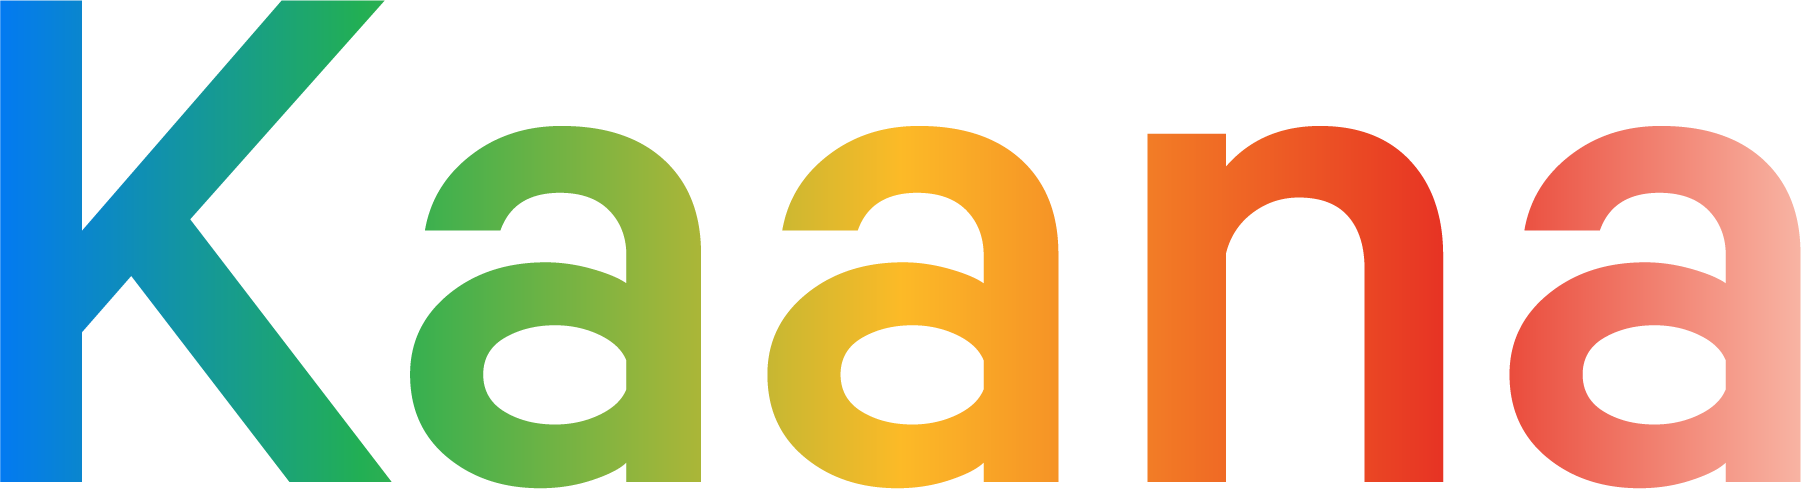 Kaana Platform LTD logo